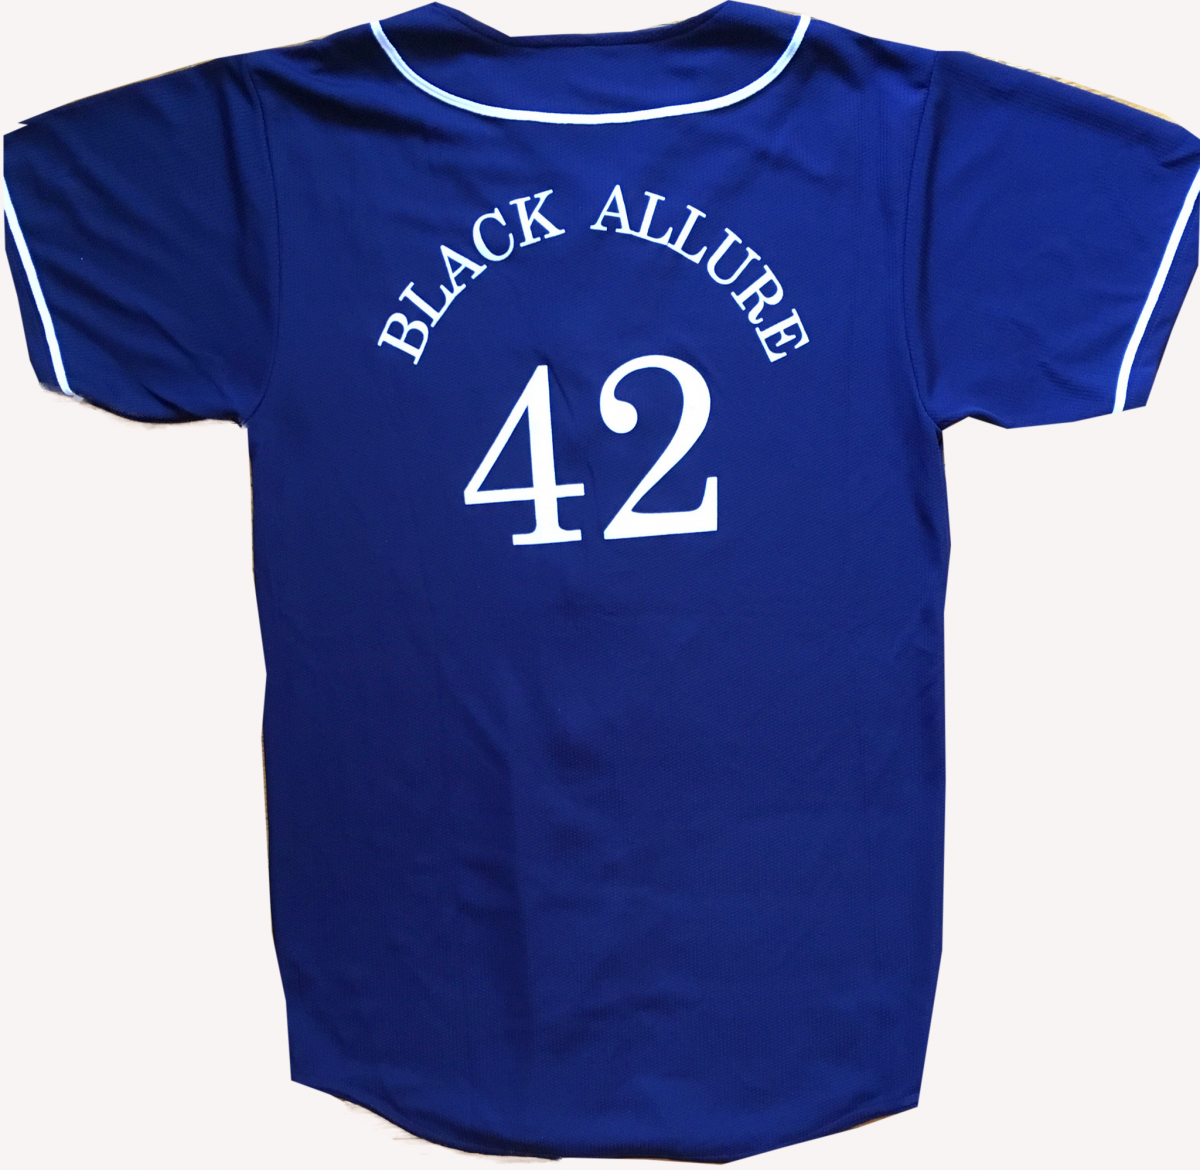 Black Allure Baseball Jersey Navy Blue
